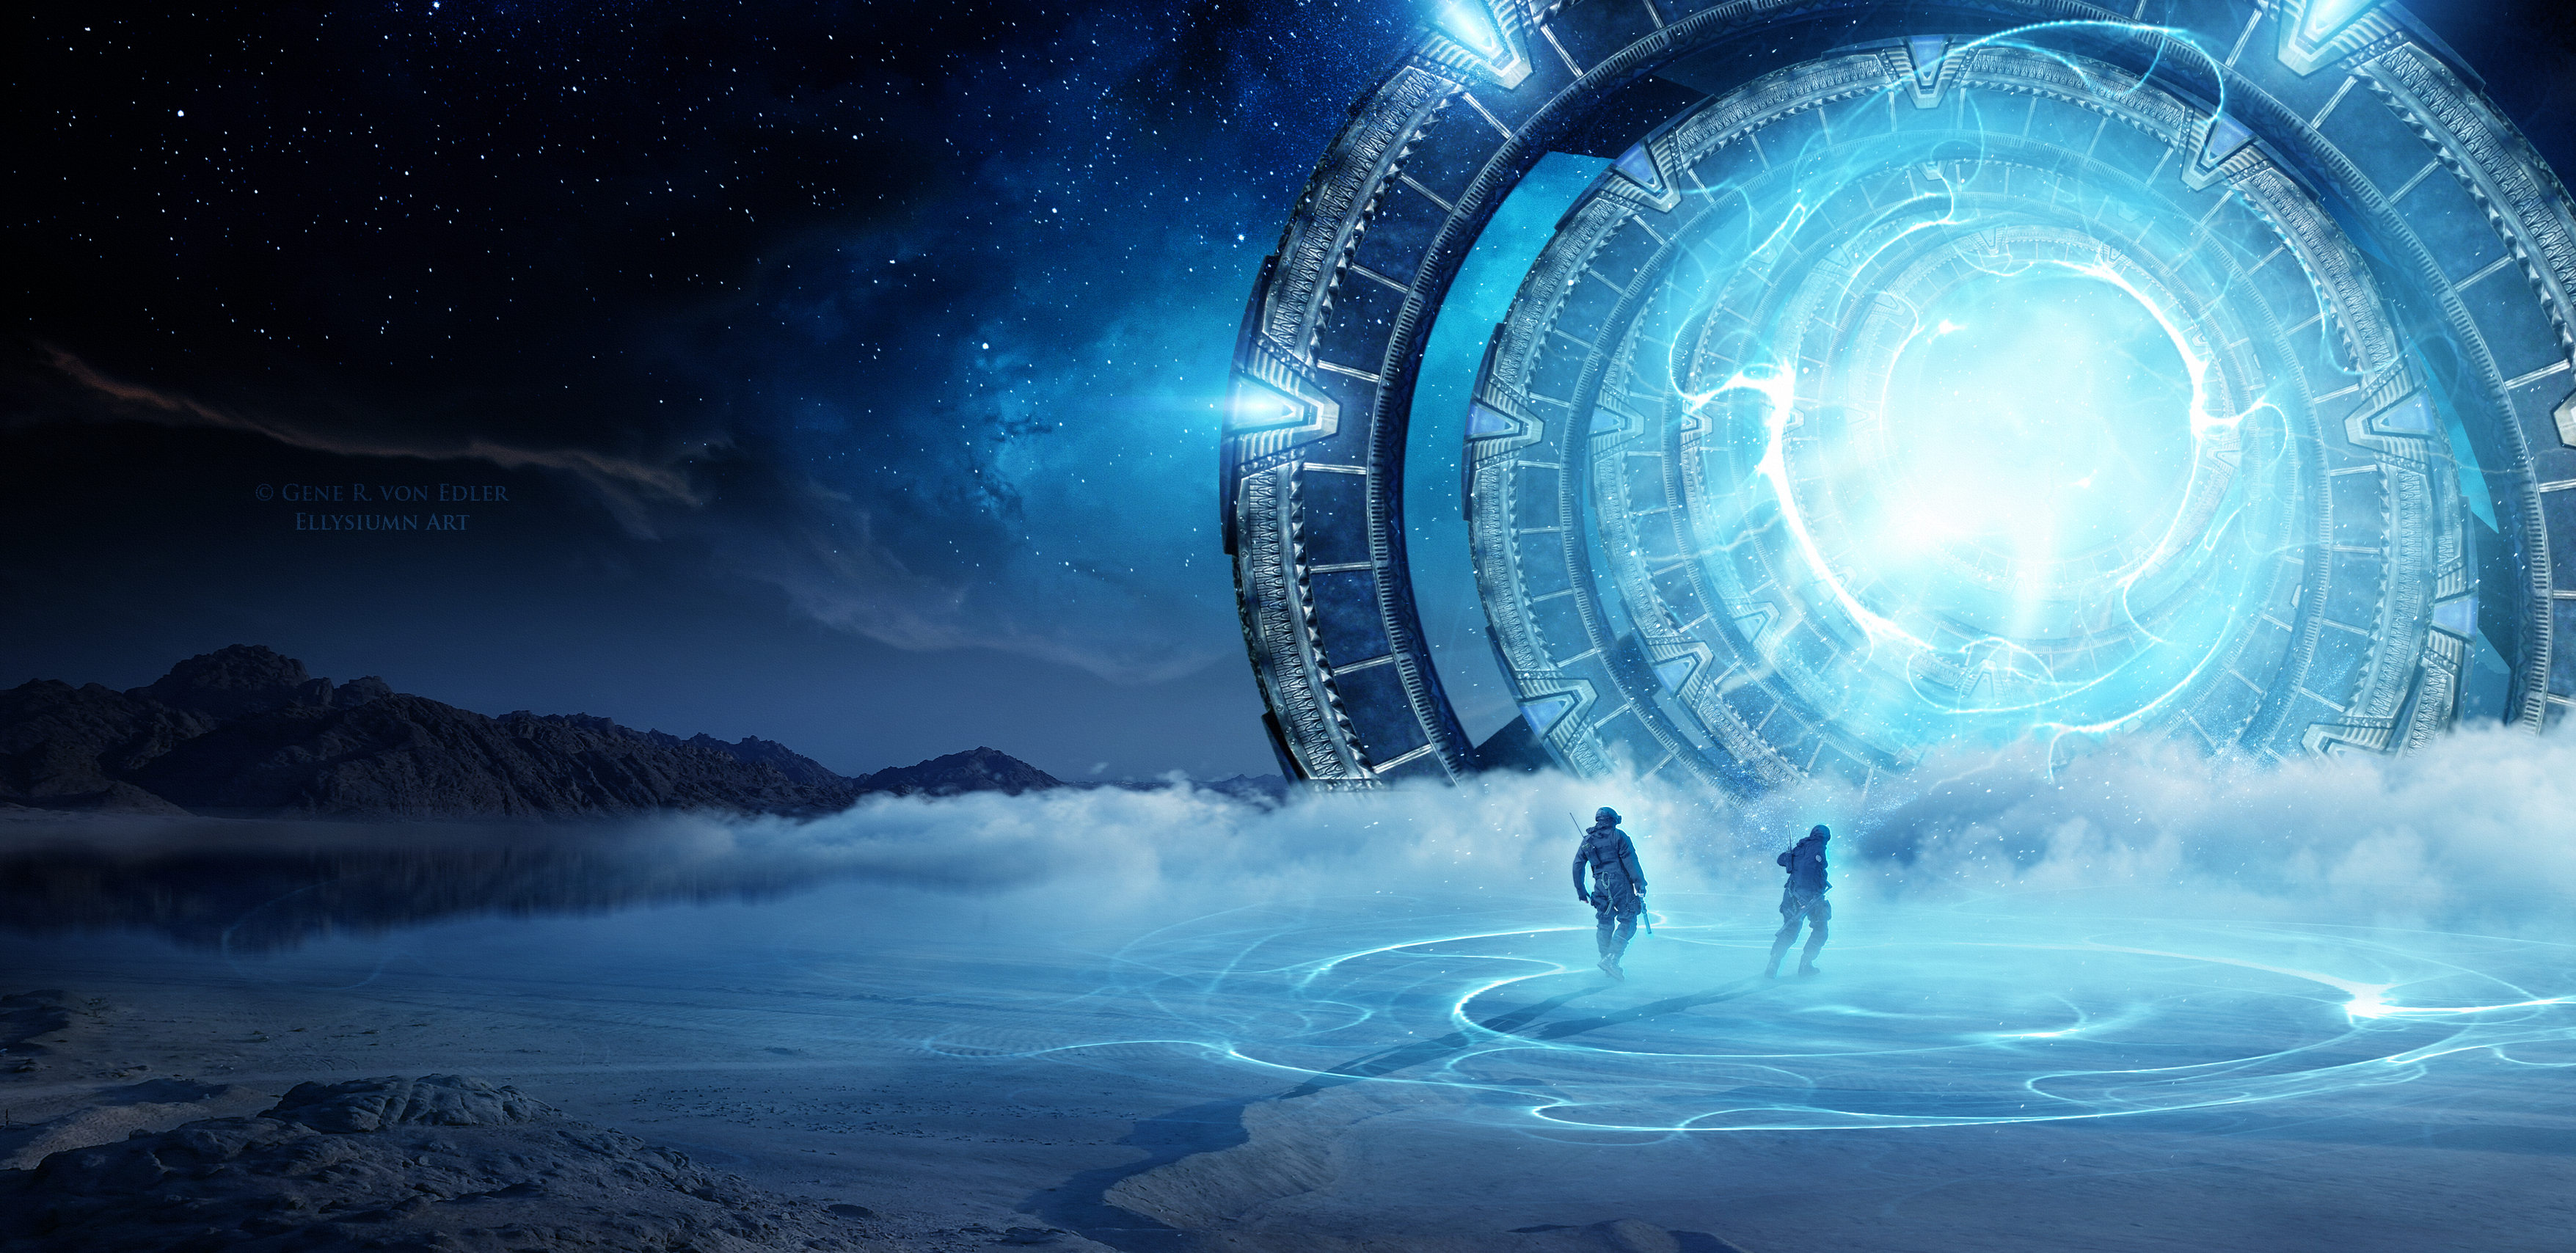 Stargate exploration by Gene R. von Edler